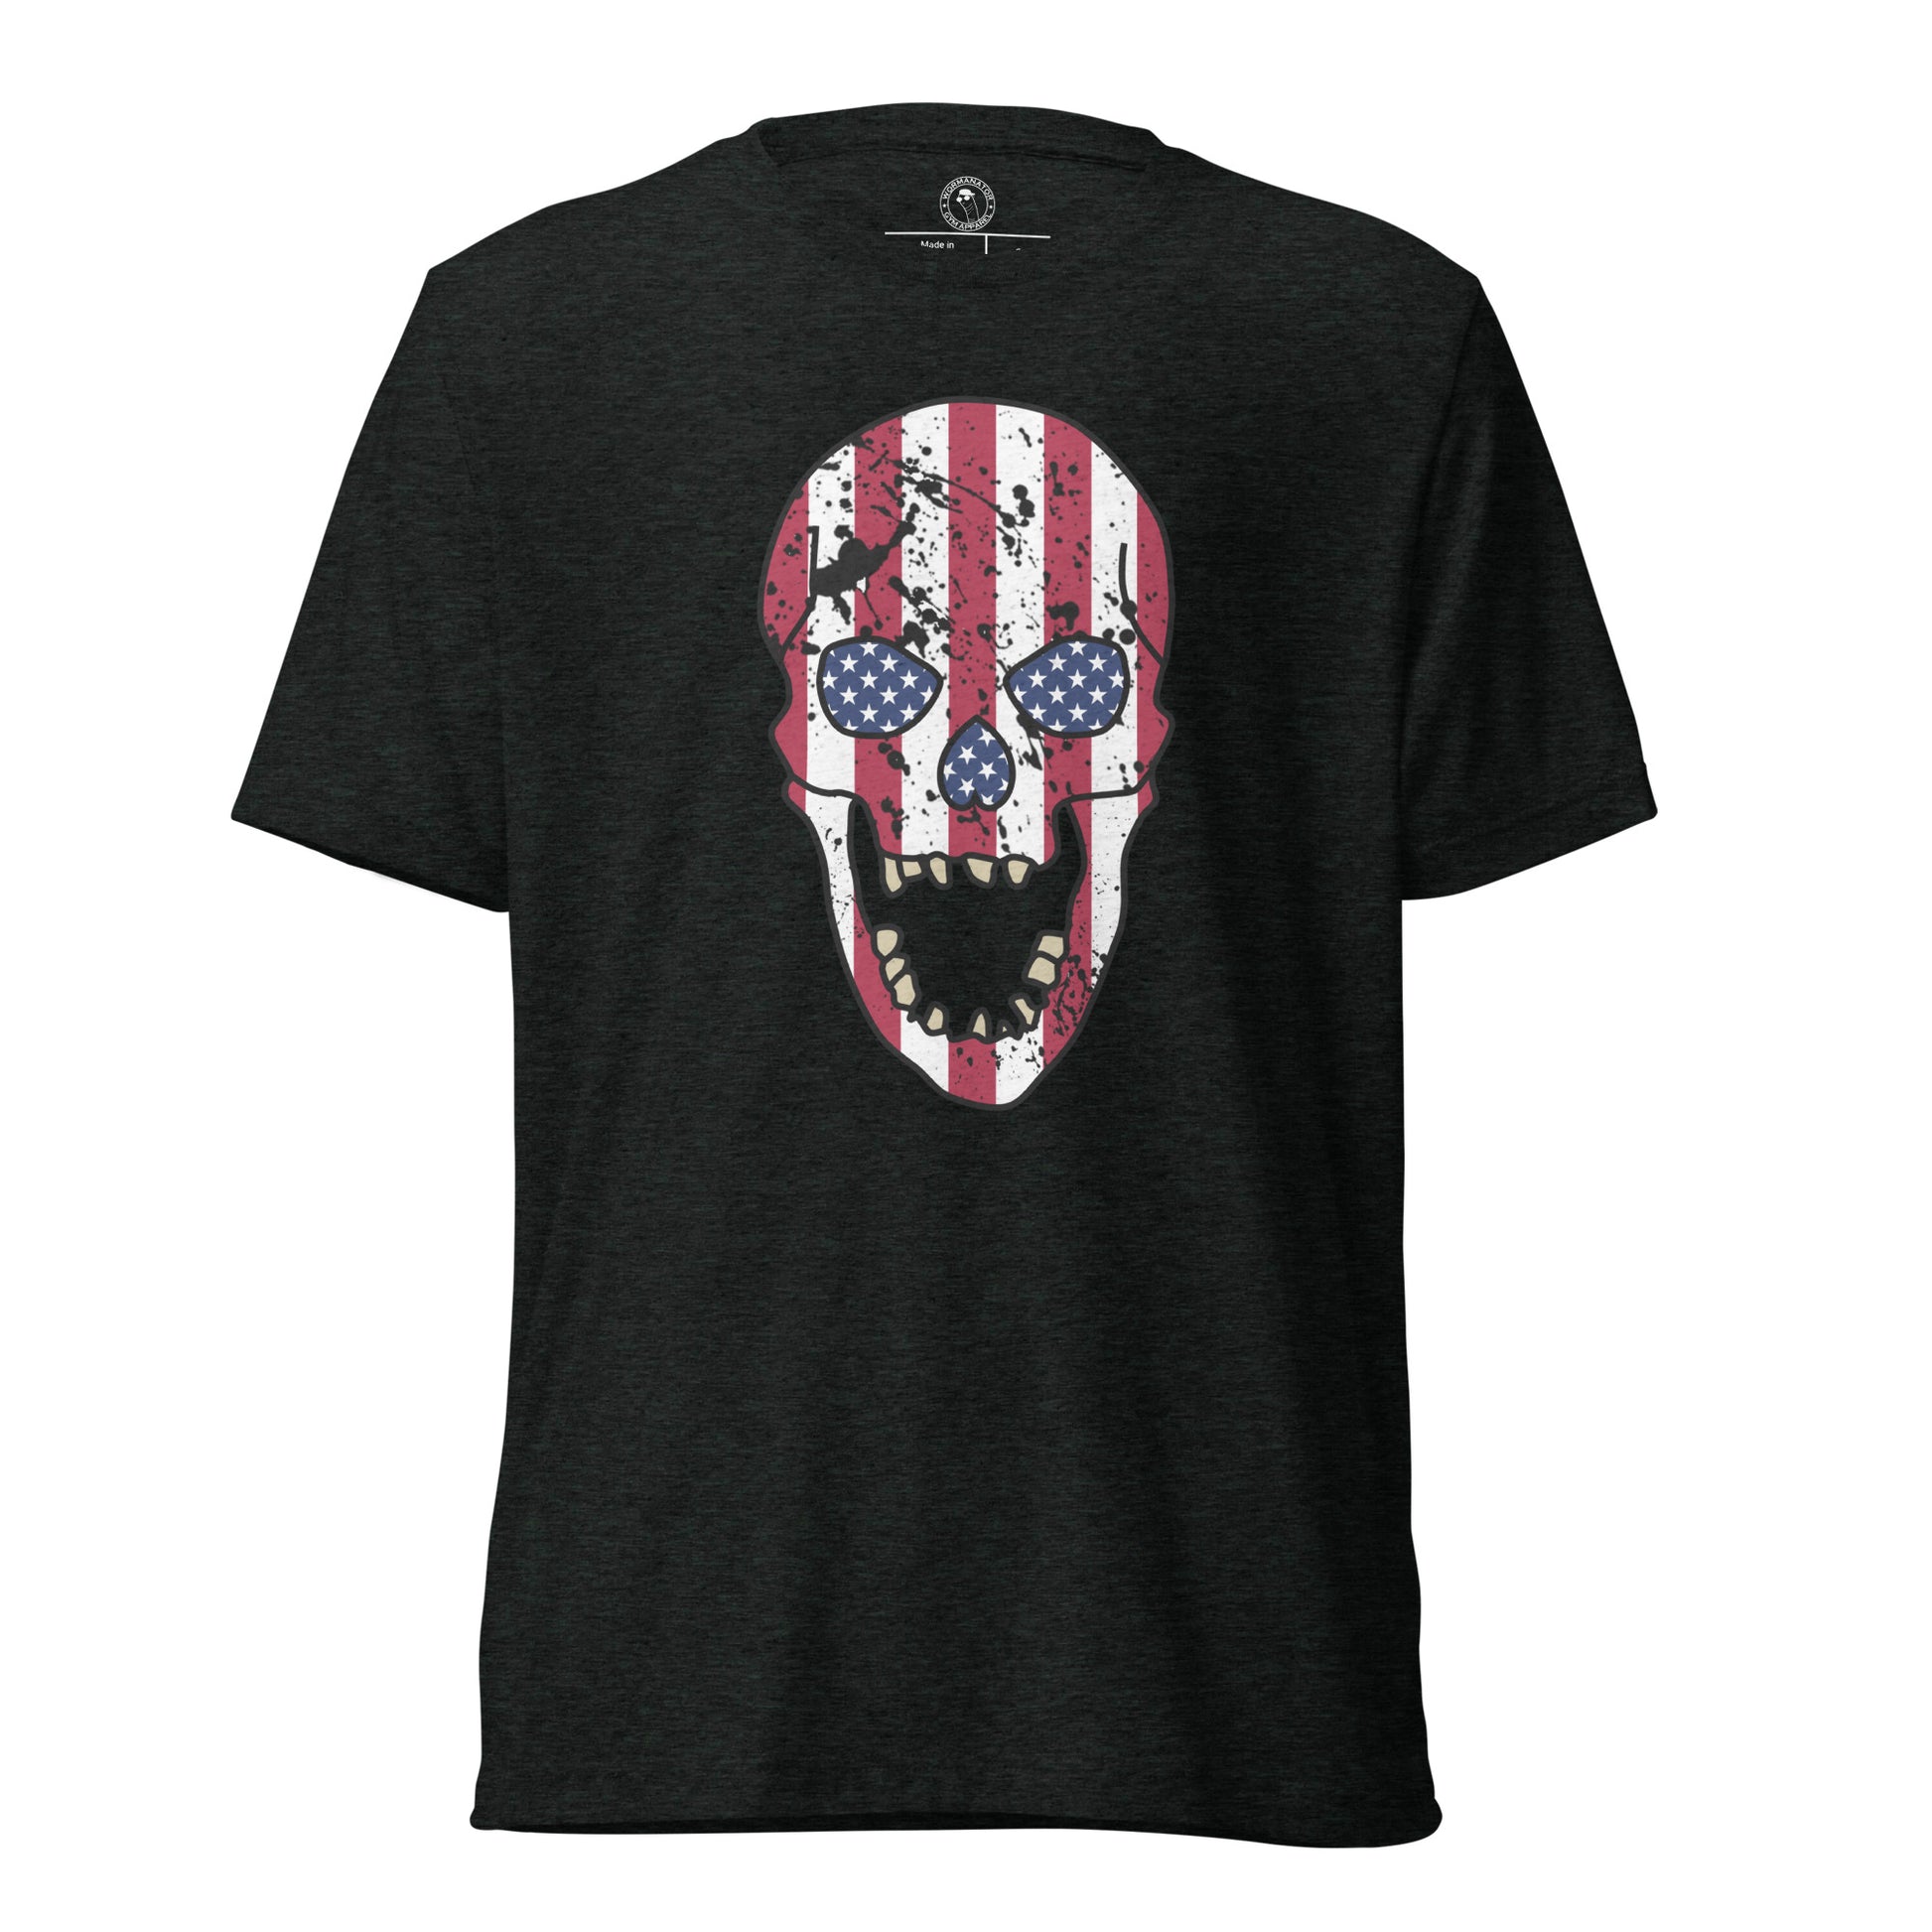 USA Skull Shirt - American Flag Punisher - Charcoal Black Triblend